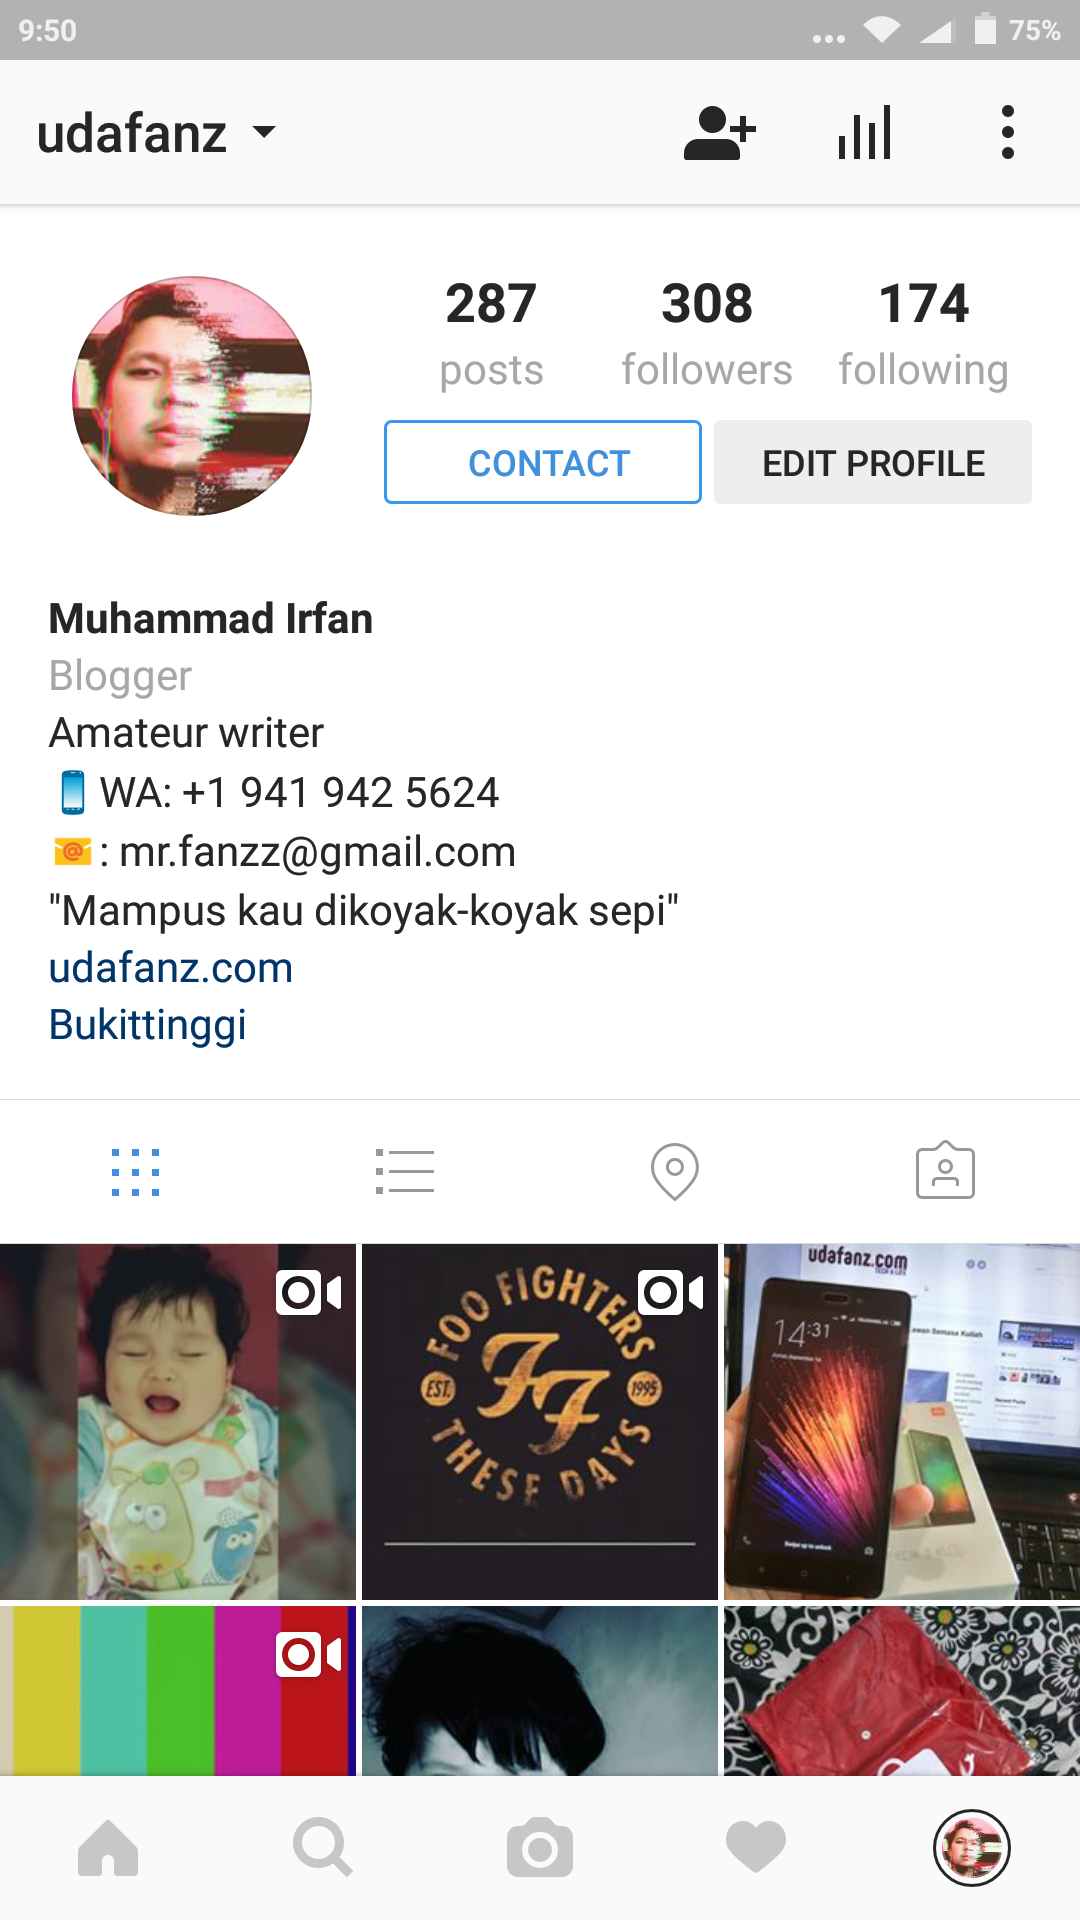 Tampilan Instagram for Business